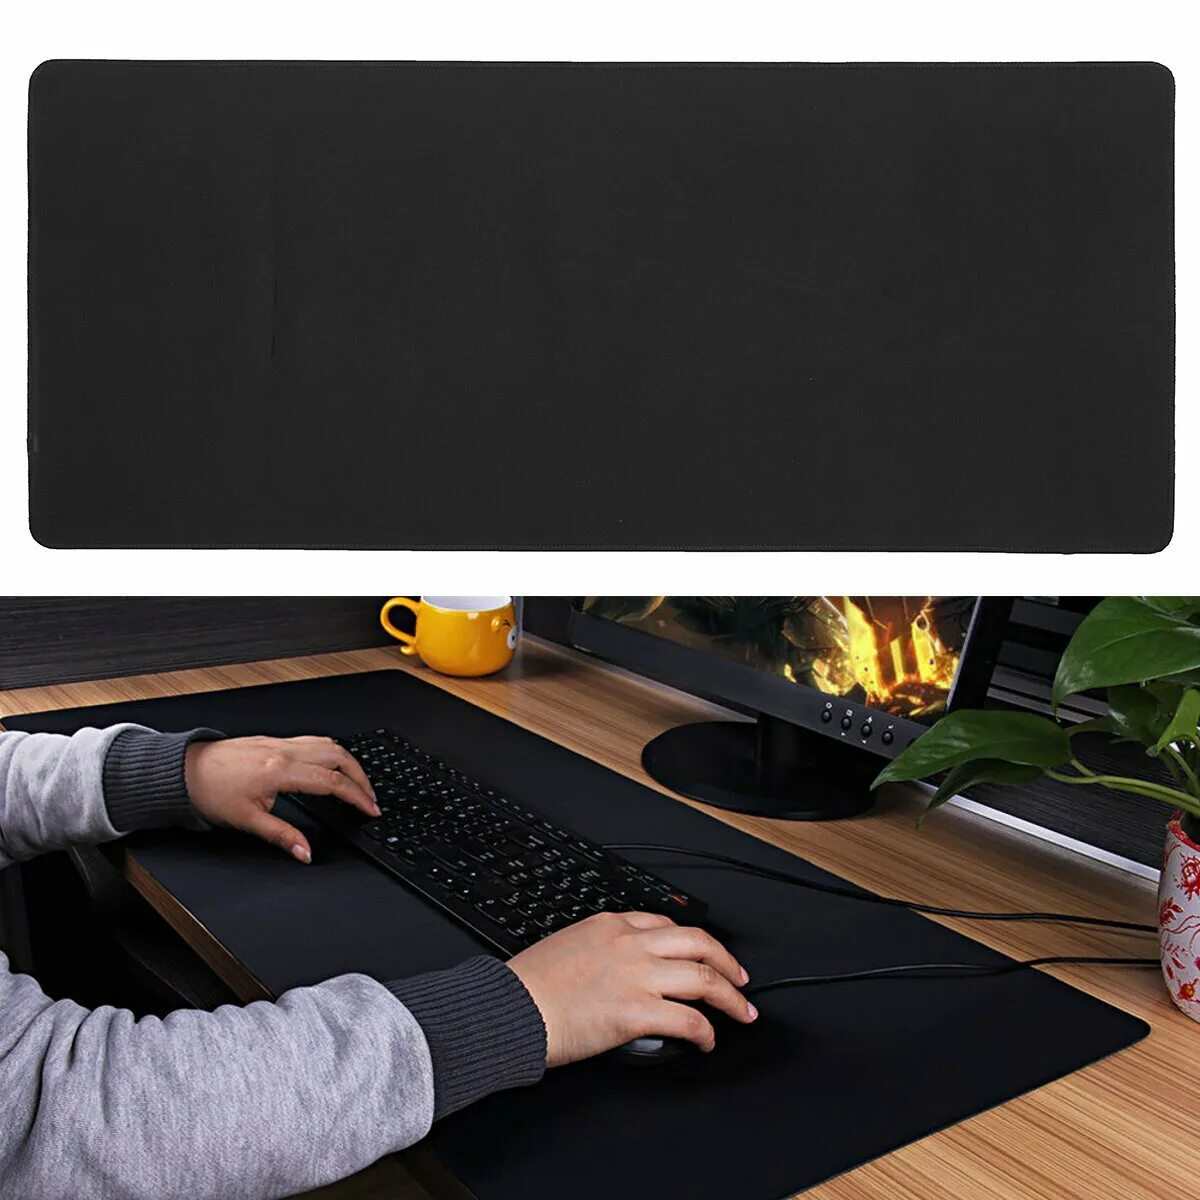 Коврик для мыши ноутбука. Коврик для мыши. Большой коврик для мыши и клавиатуры. Резиновый коврик для мыши. Коврик для мыши черный.